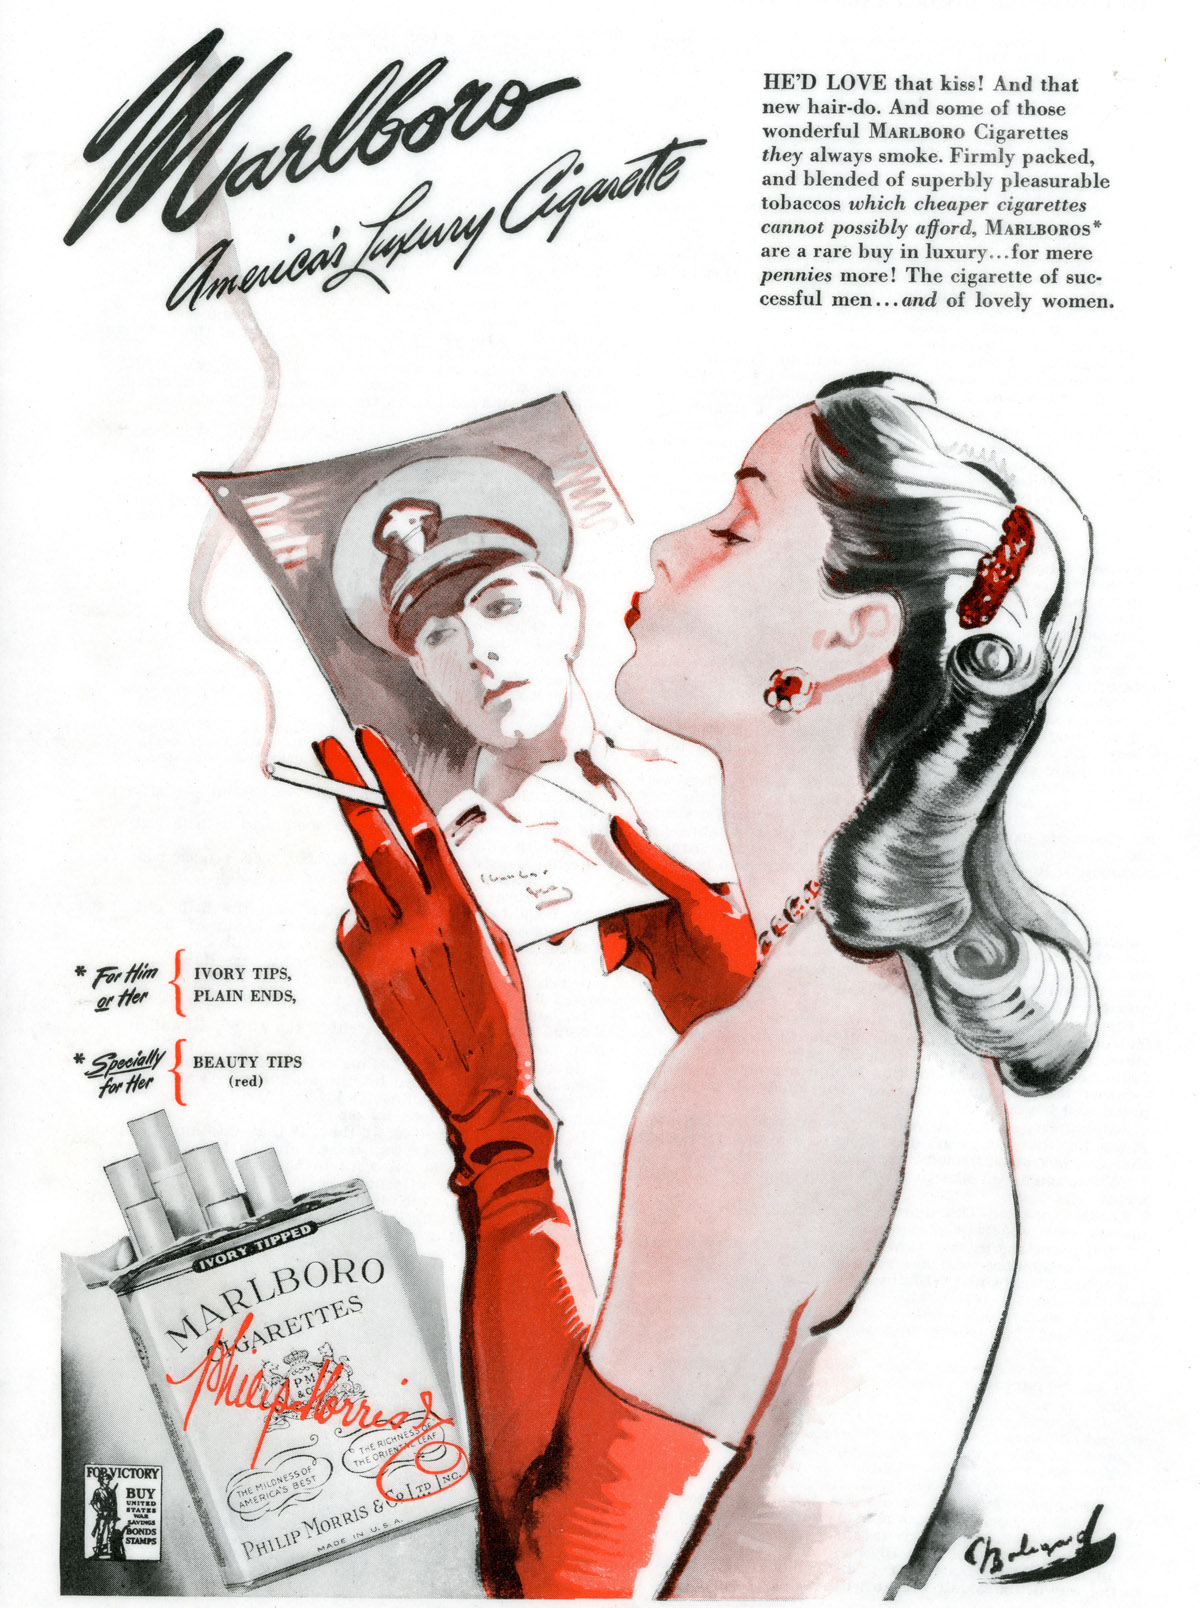 1944 advert for smoking